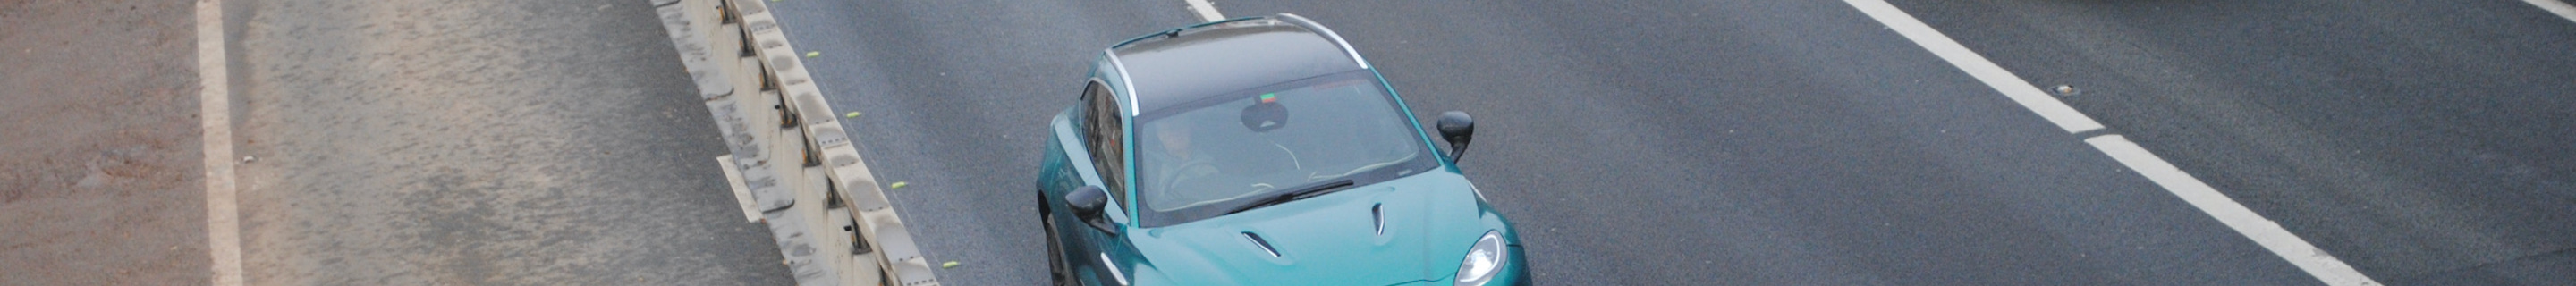 Aston Martin DBX Hybrid